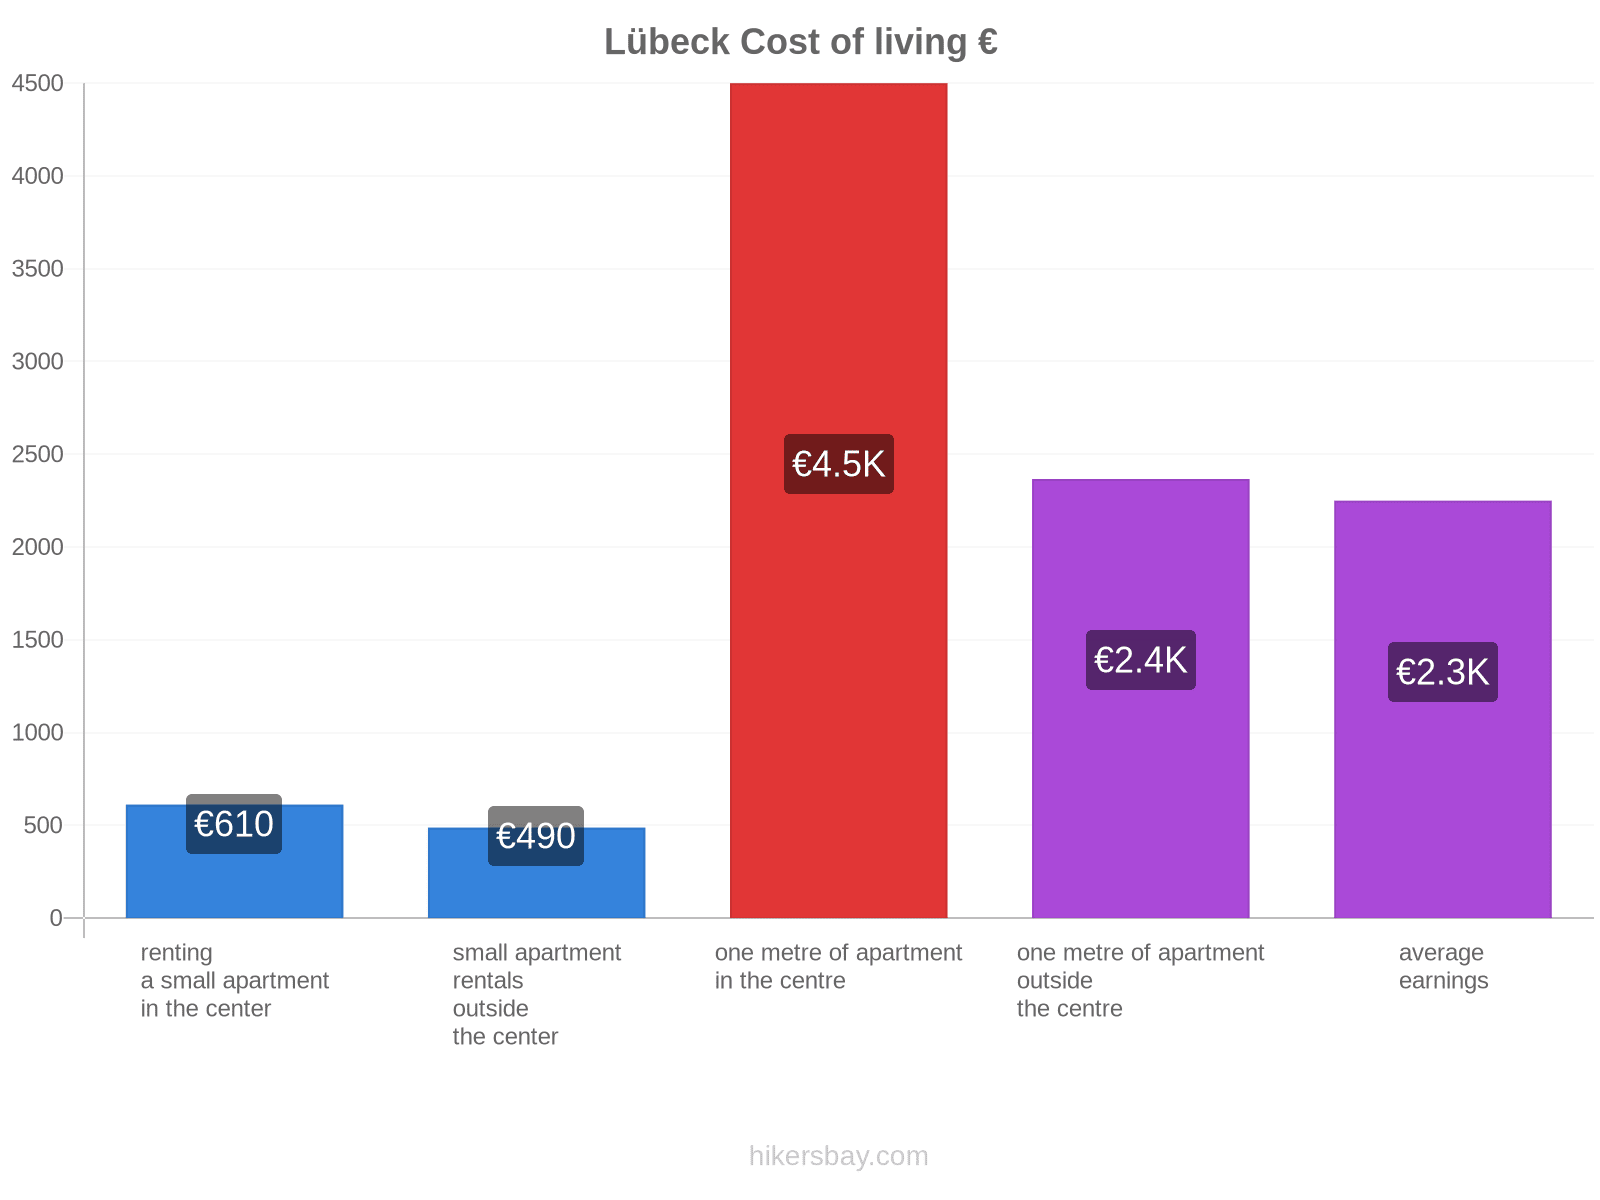 Lübeck cost of living hikersbay.com